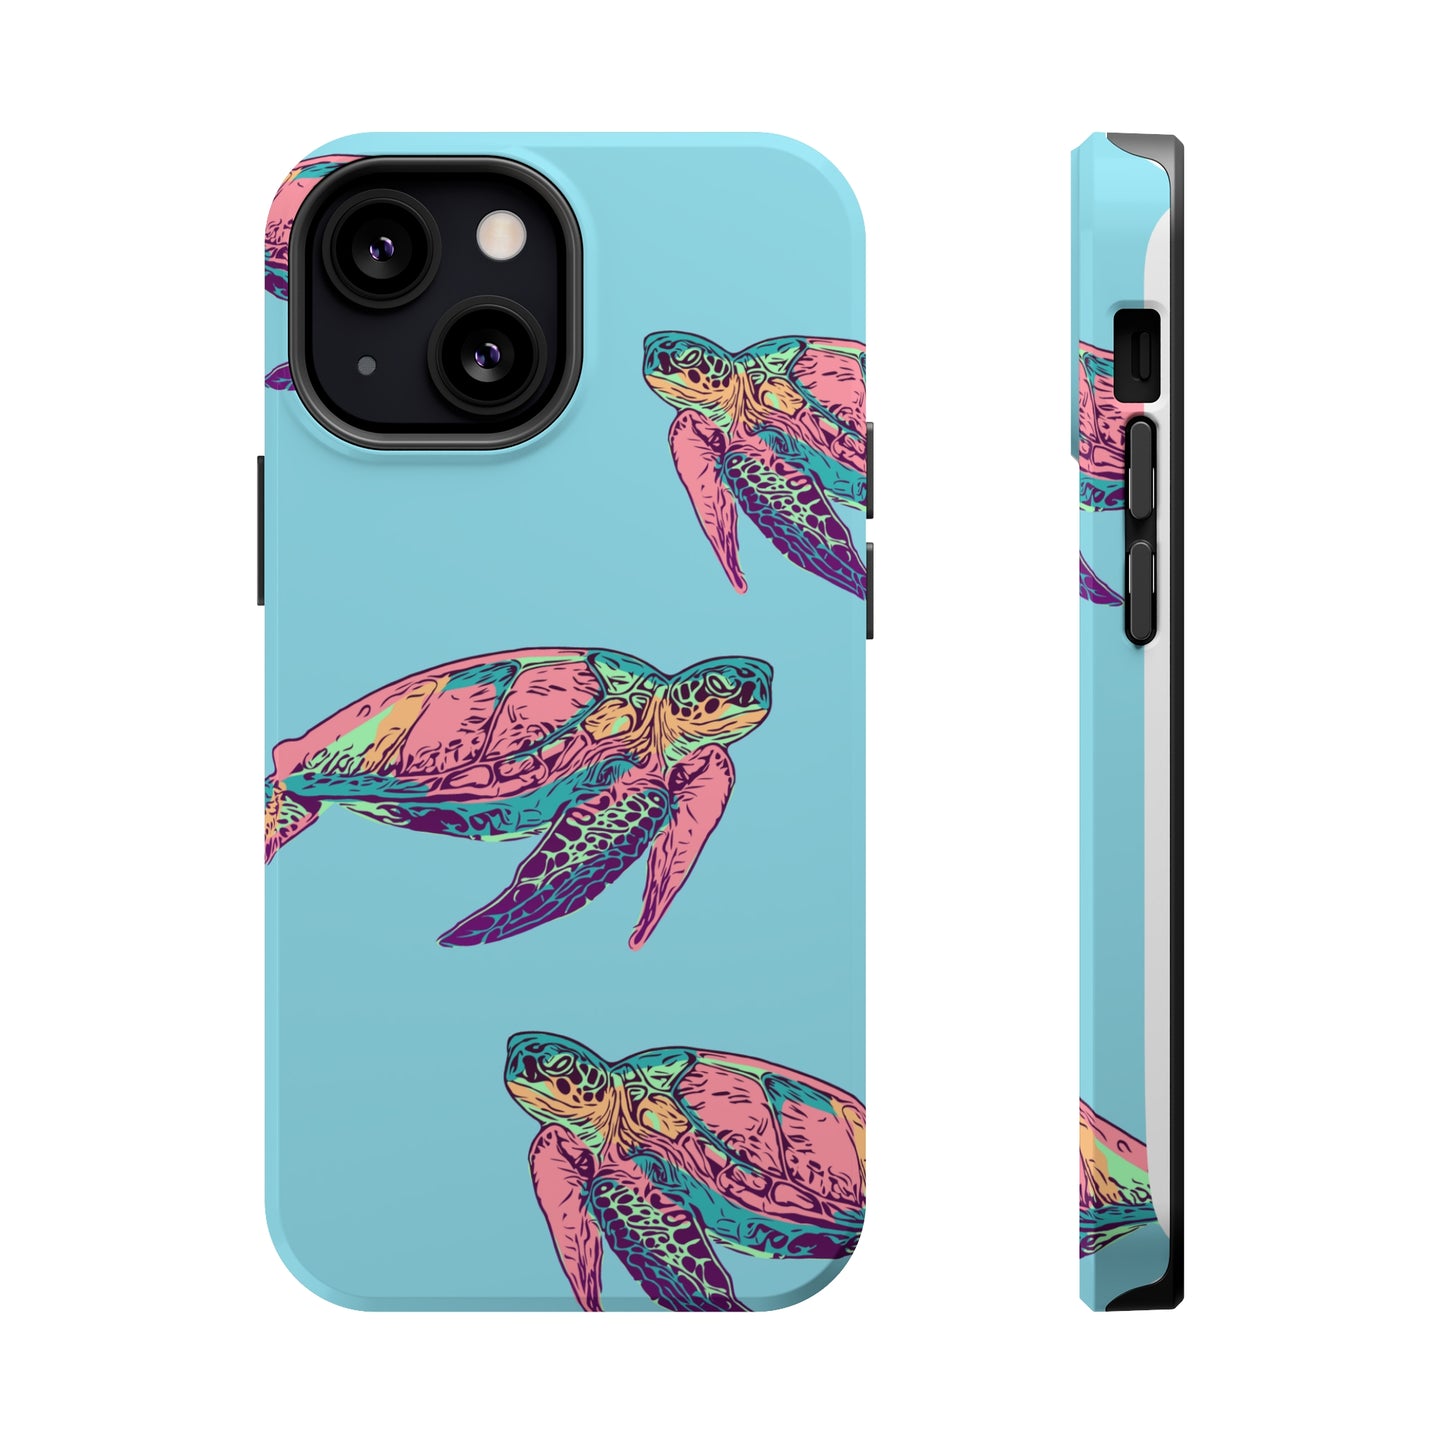 MagSafe iPhoneケース ・Vibrant Turtle